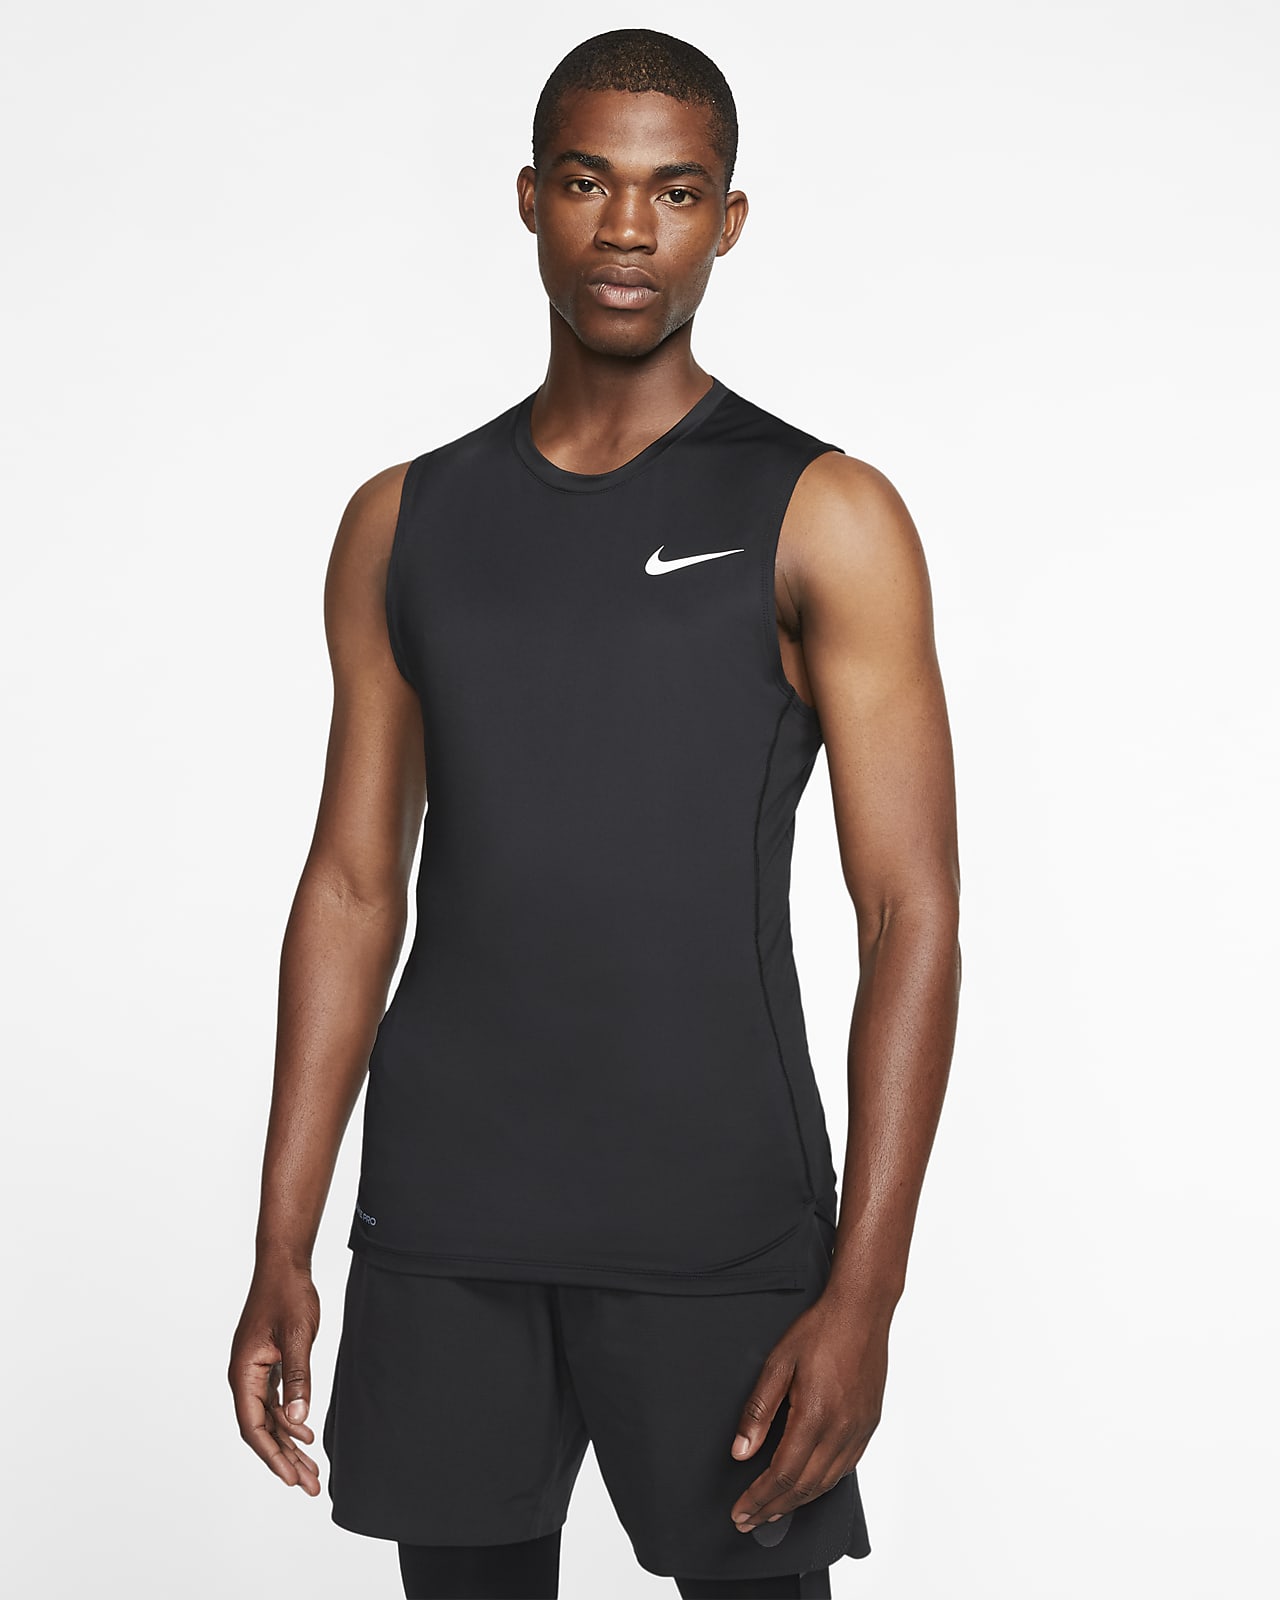 Nike Pro Men's Sleeveless Top. Nike SA